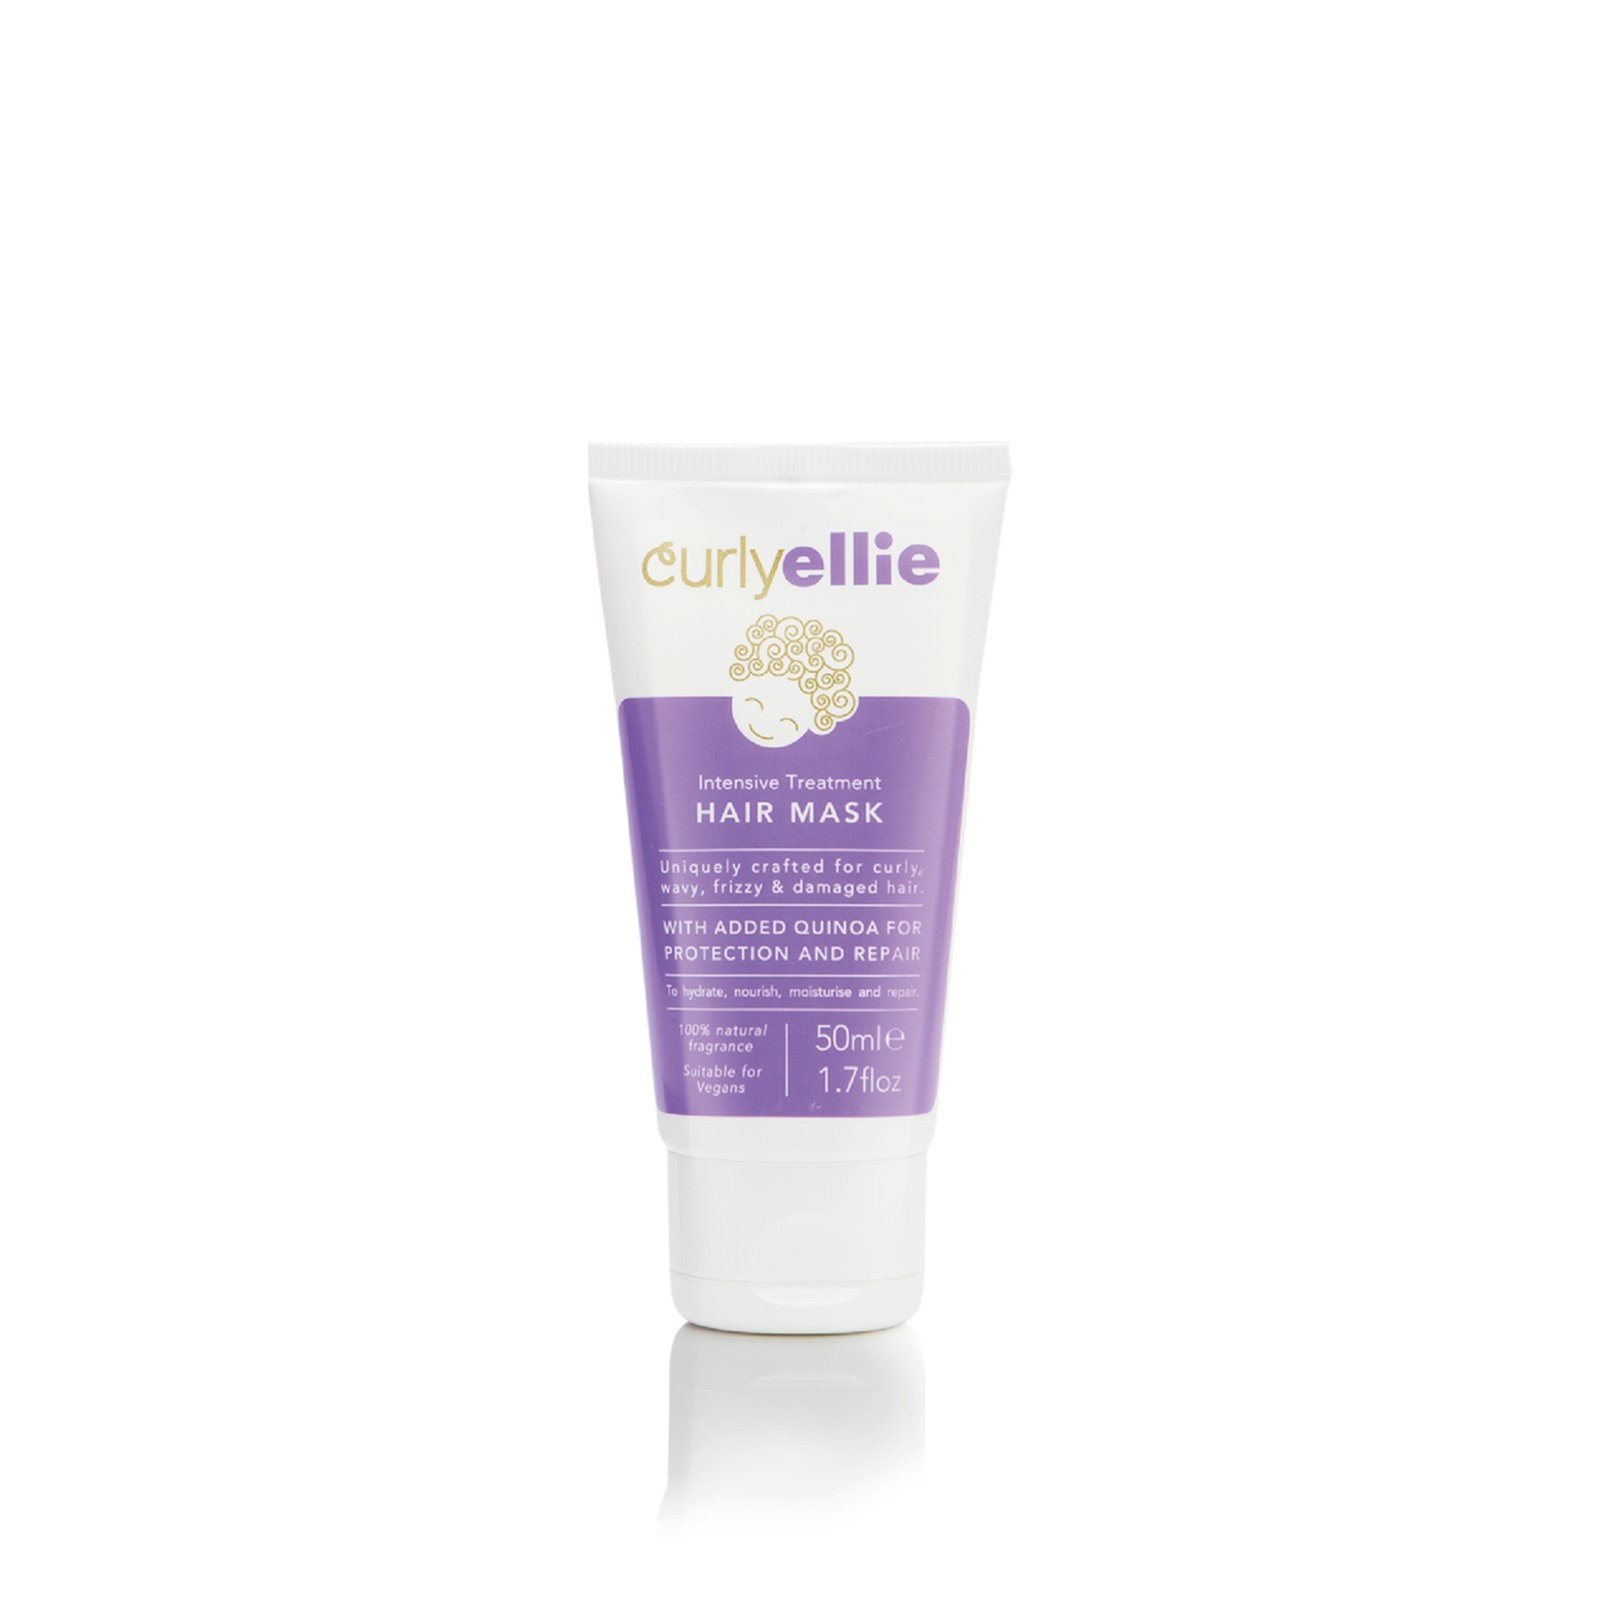 CurlyEllie Intensive Treatment Hair Mask 50ml (1.7 fl oz)